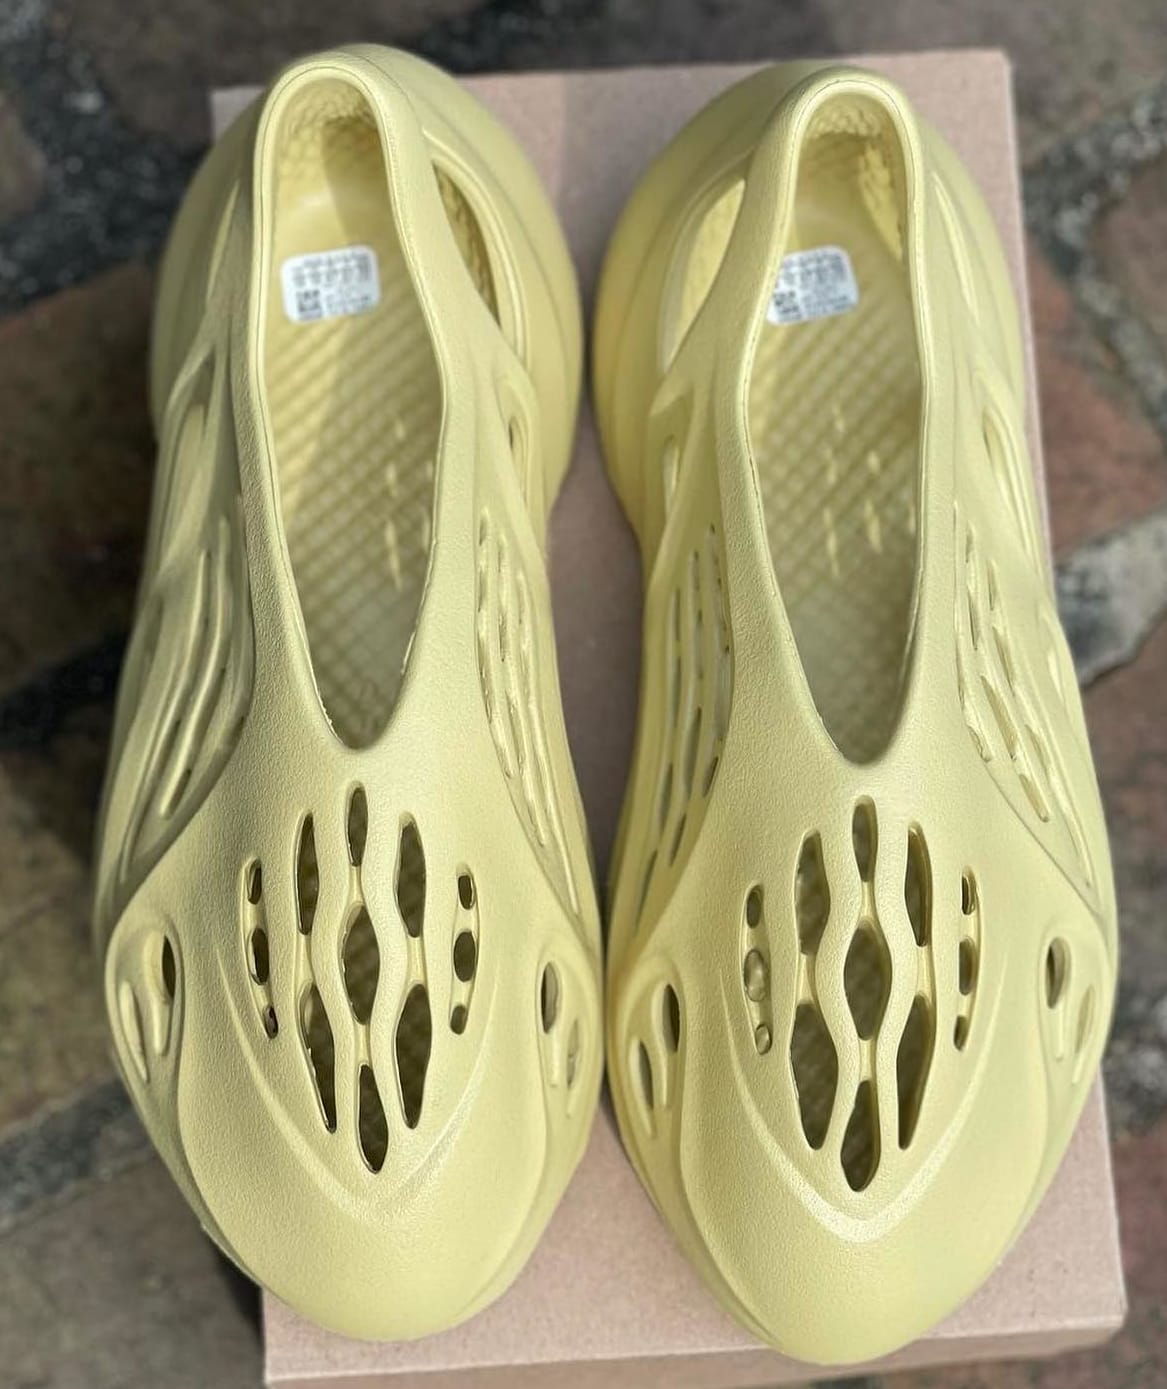 Adidas Yeezy Foam Runner 'Sulfur' Top